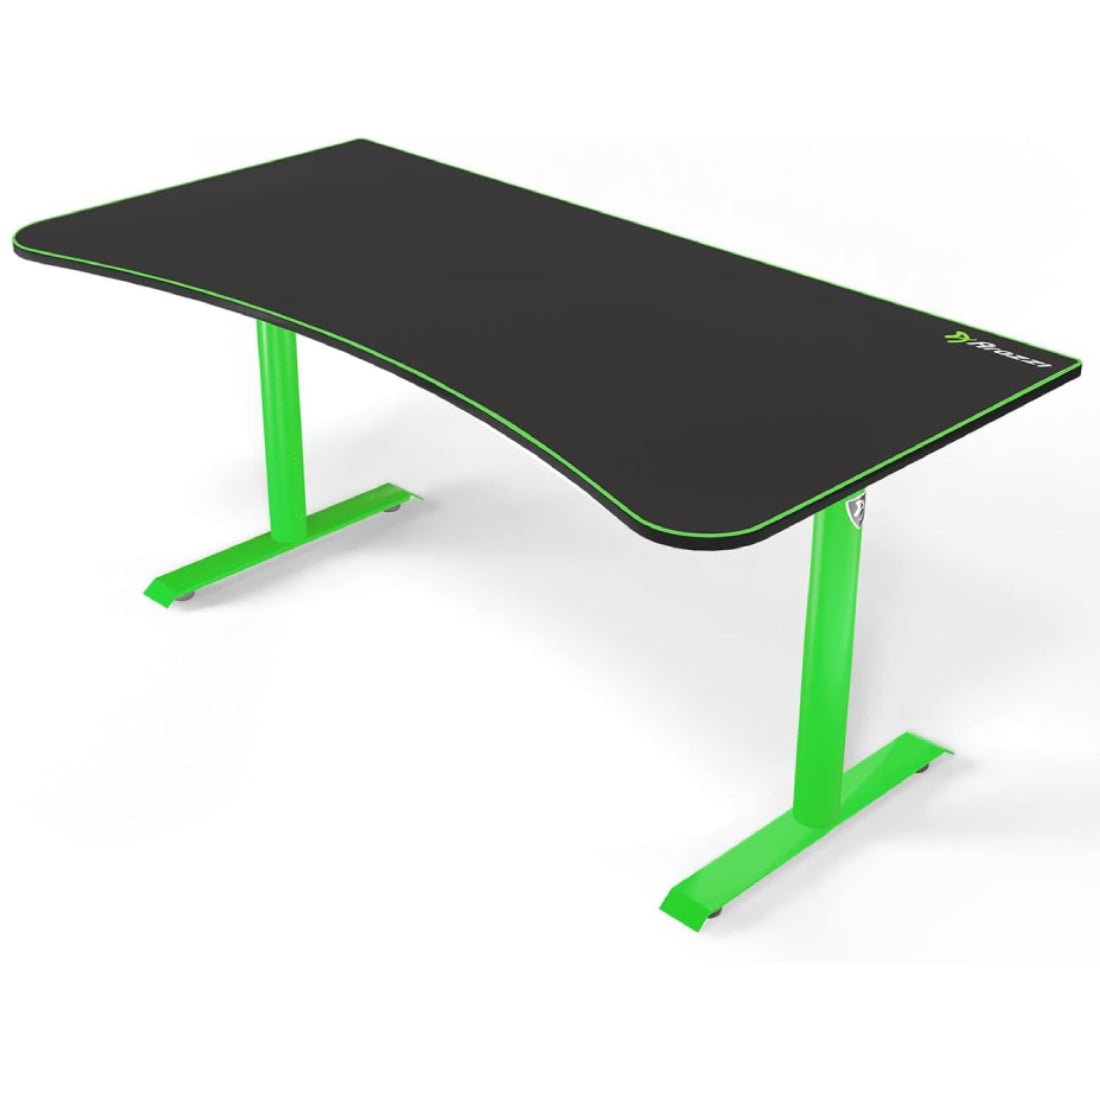 Arozzi Arena Gaming Desk - Green - طاولة ألعاب - Store 974 | ستور ٩٧٤